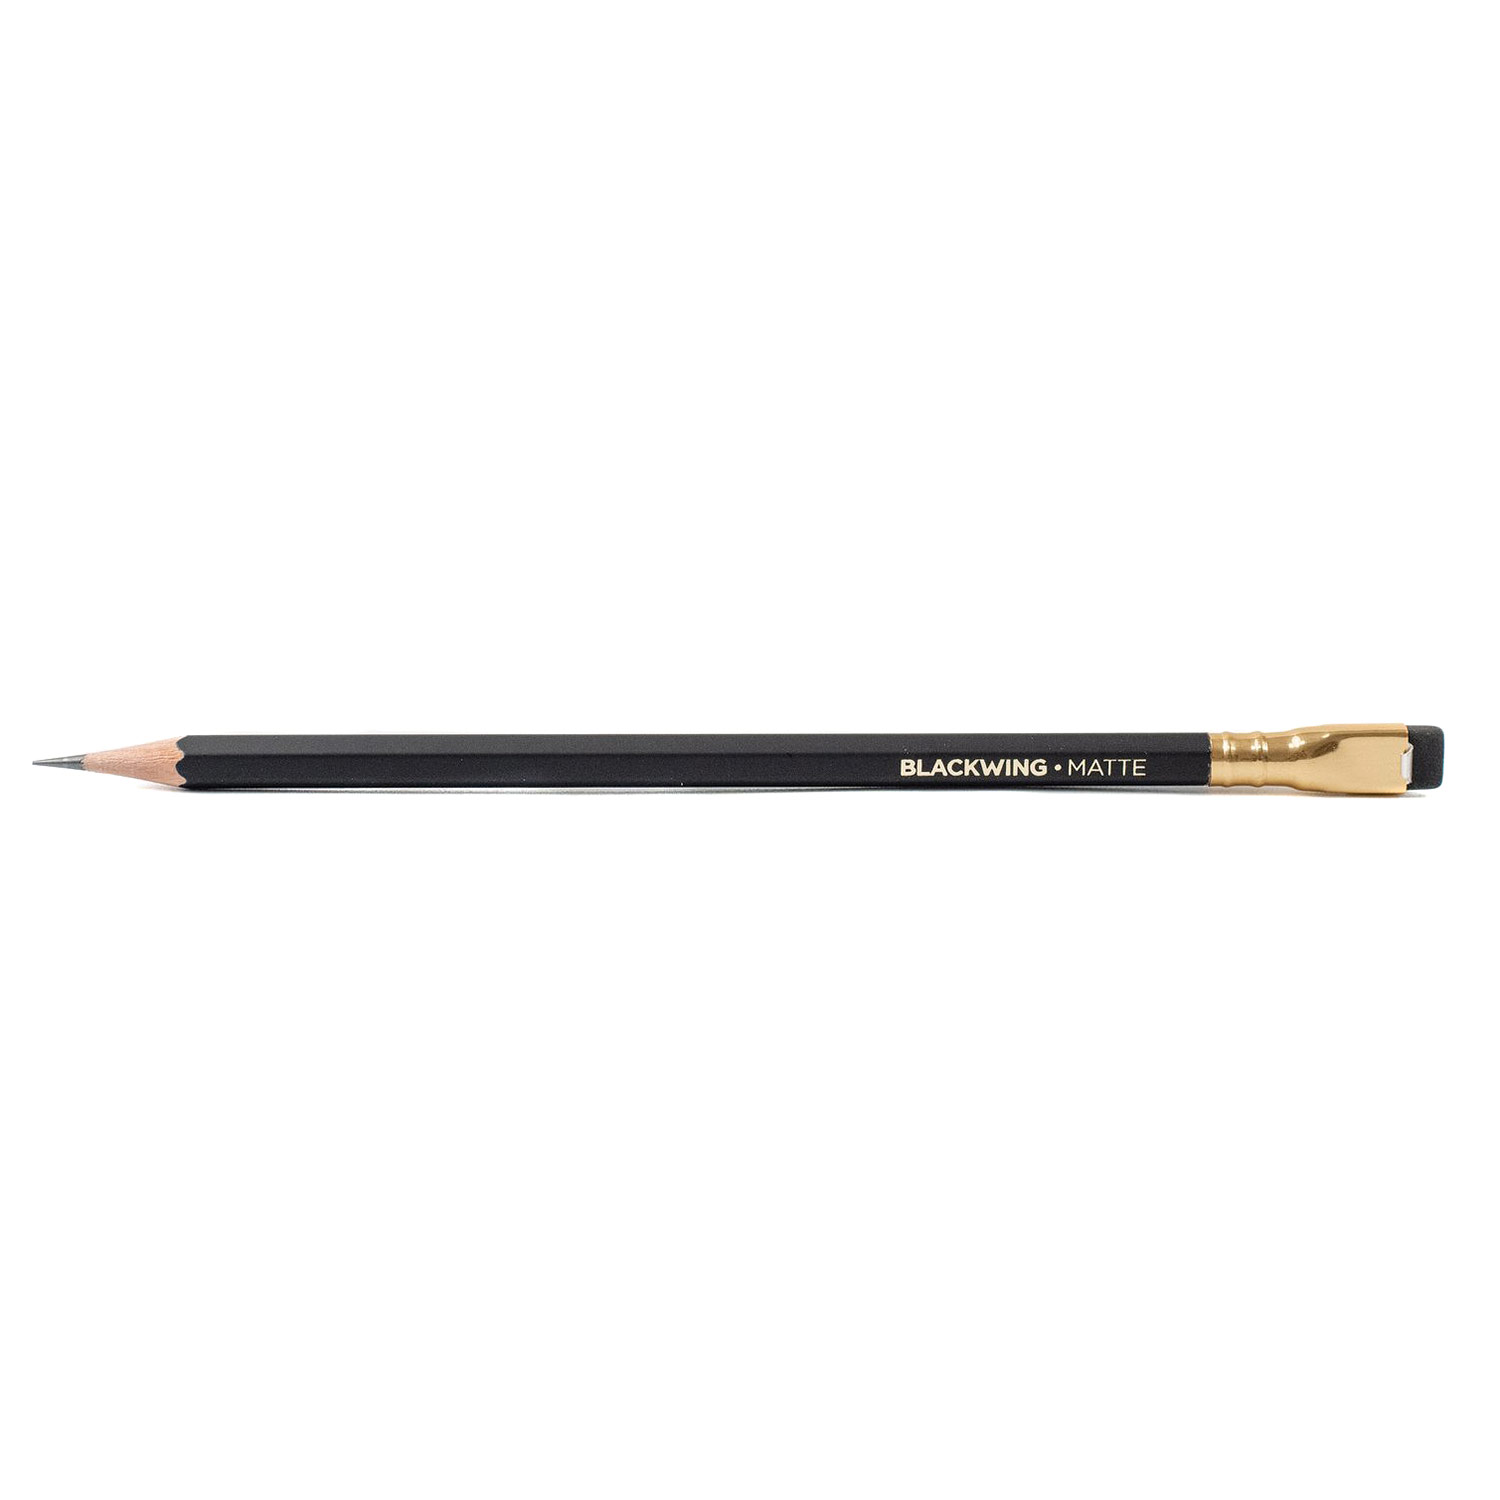 Blackwing Matte Pencils - 12 Count